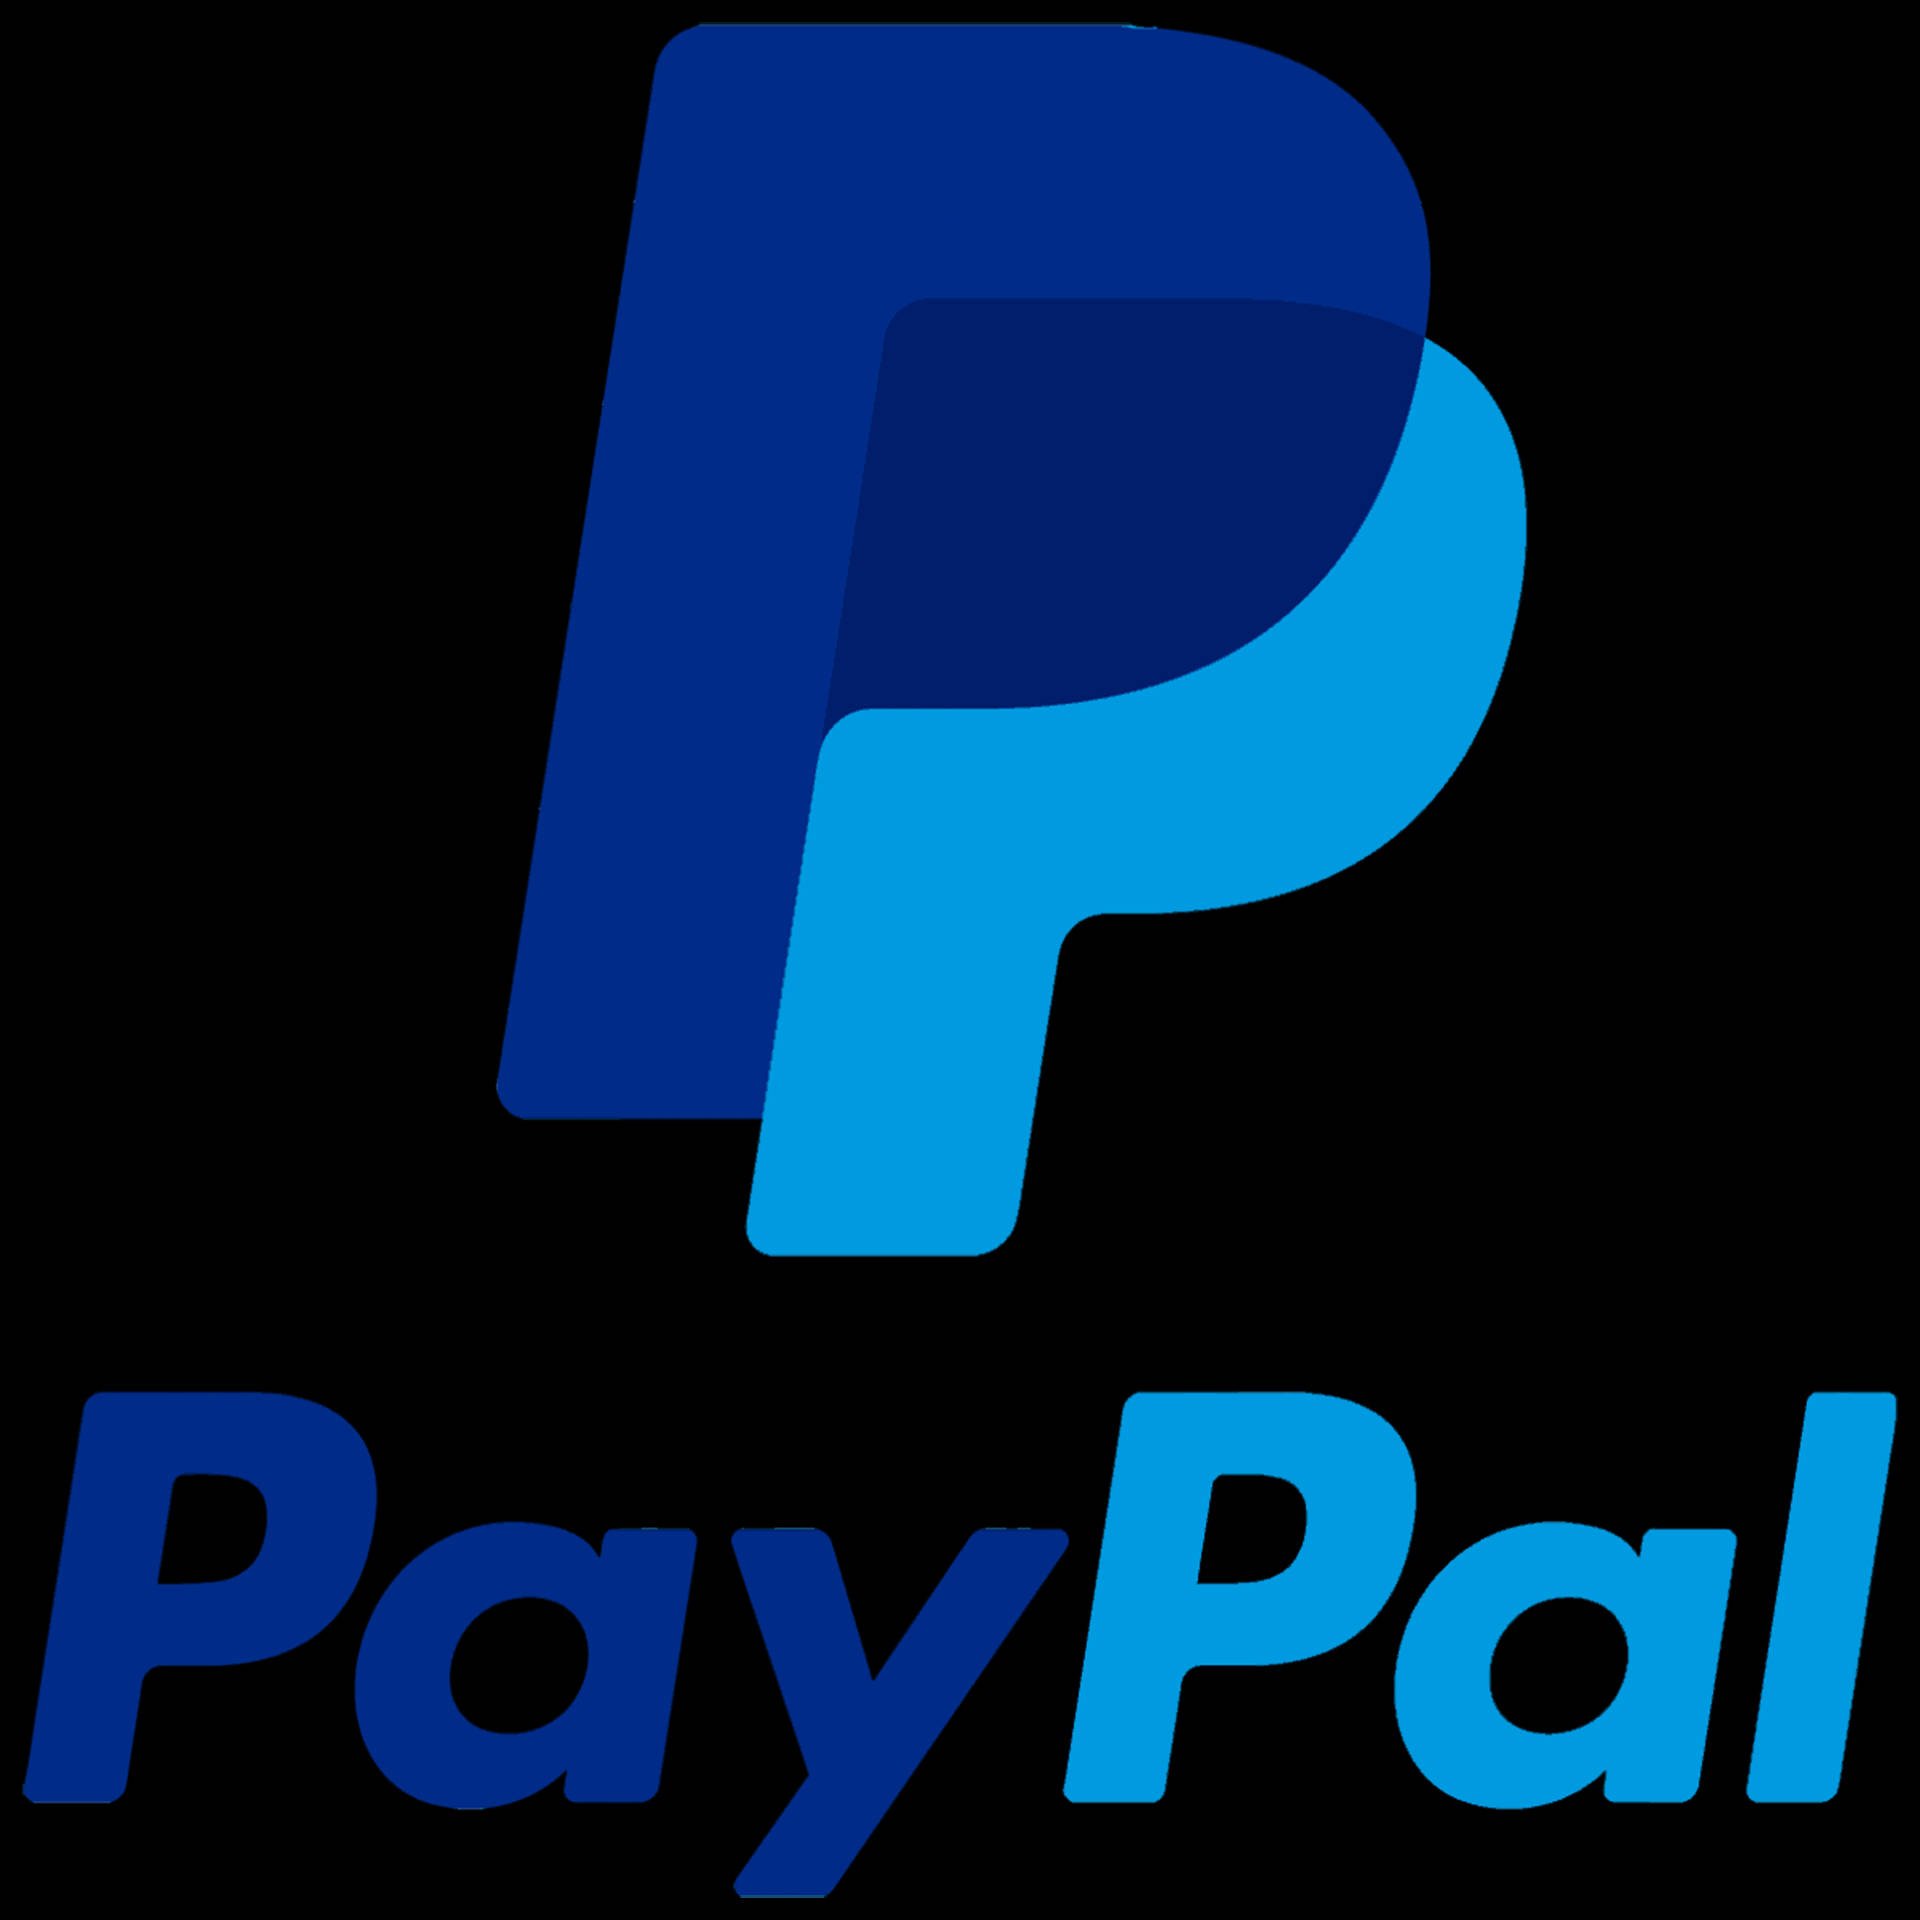 paypal-logo.jpeg